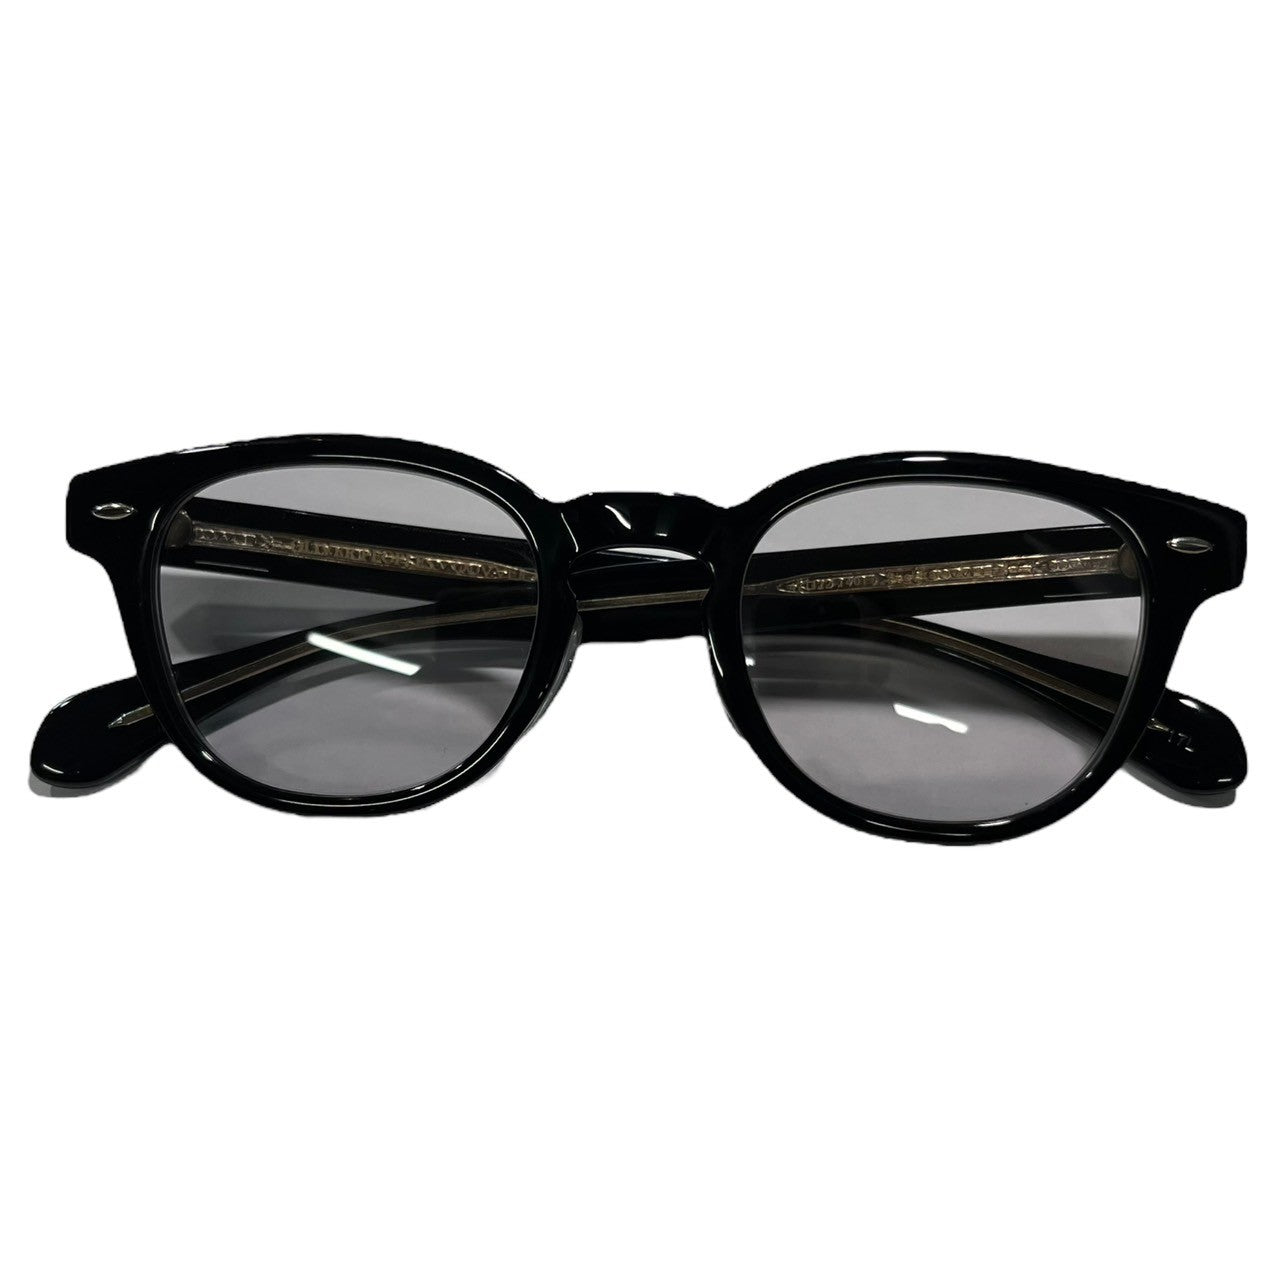 OLIVER PEOPLES(オリバーピープルズ) Sheldrake-J ウェリントン サングラス 47□22-140 ブラック 眼鏡 メガネ